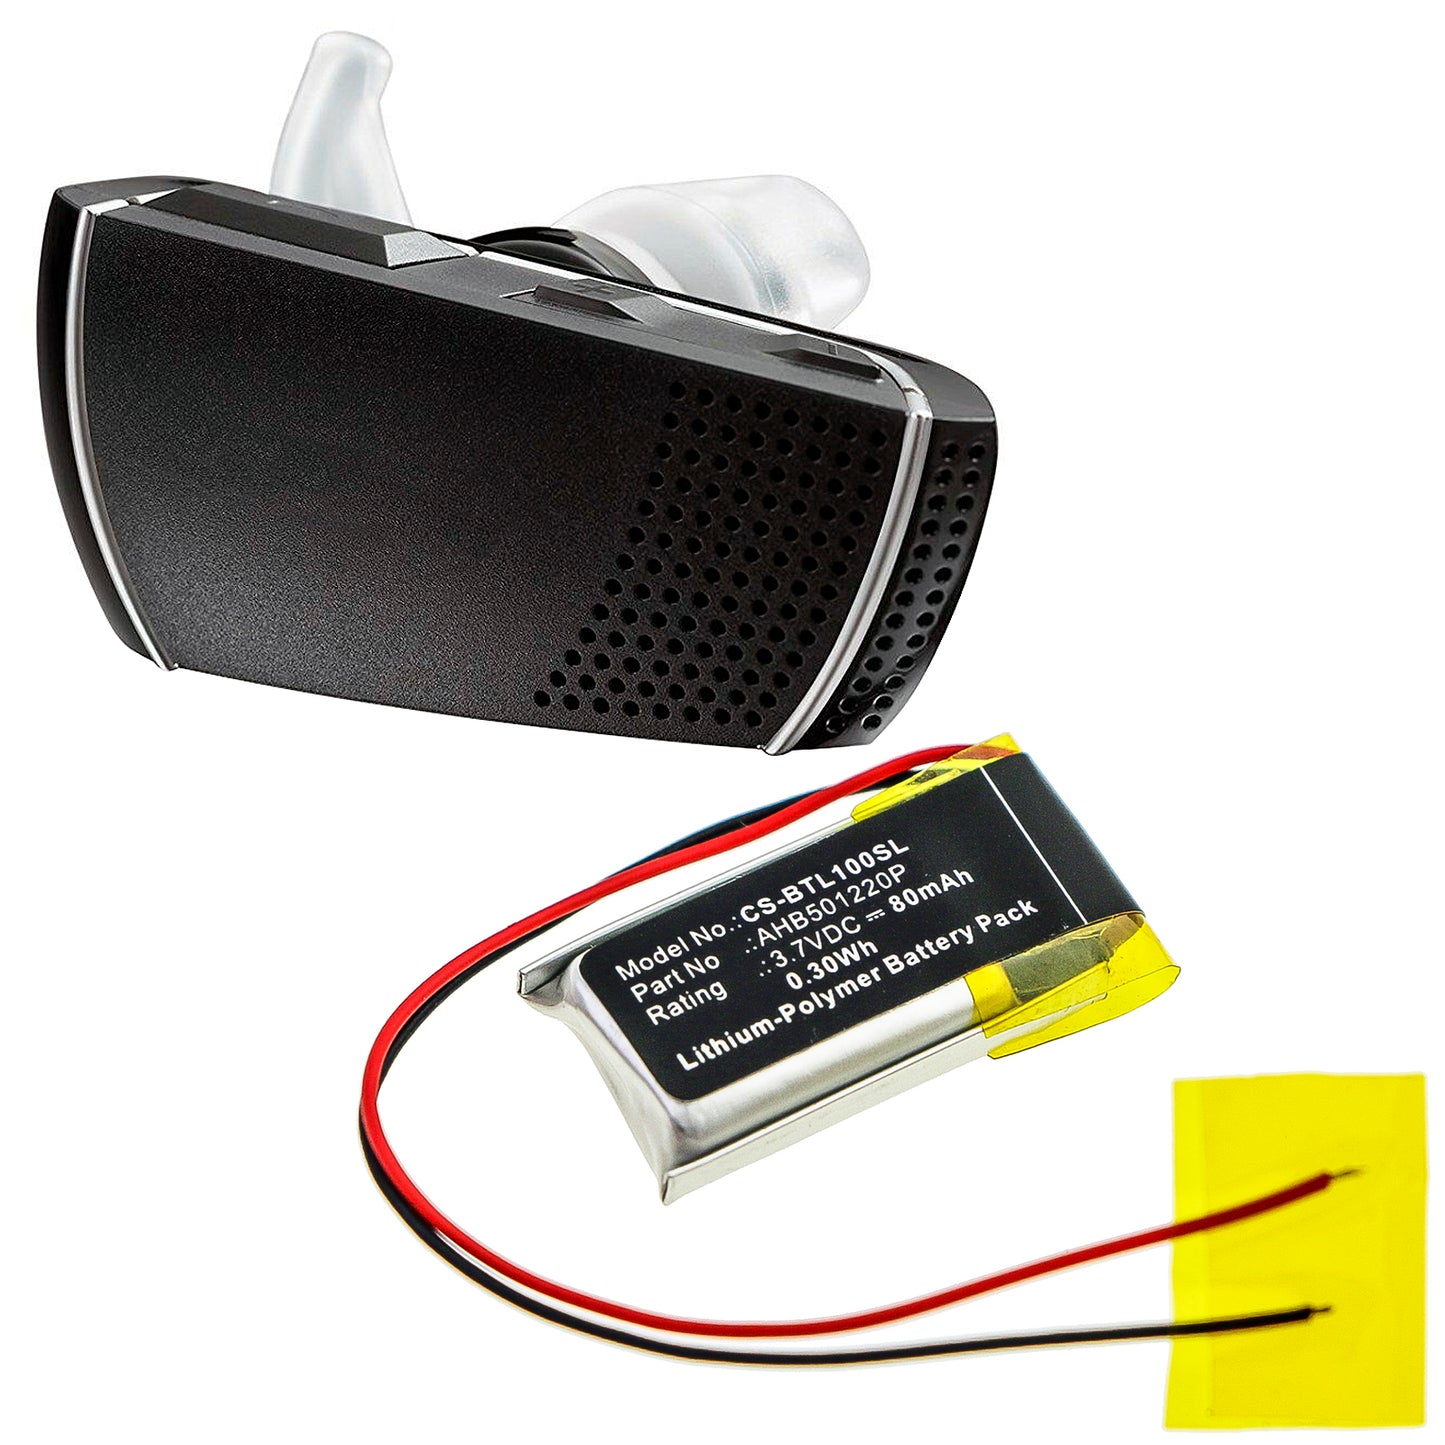 80mAh AHB501220P Battery for Bose Bluetooth Headset Series 1, Series 2, BTL1, BTL2, BTR1, BTR2-SMAVtronics